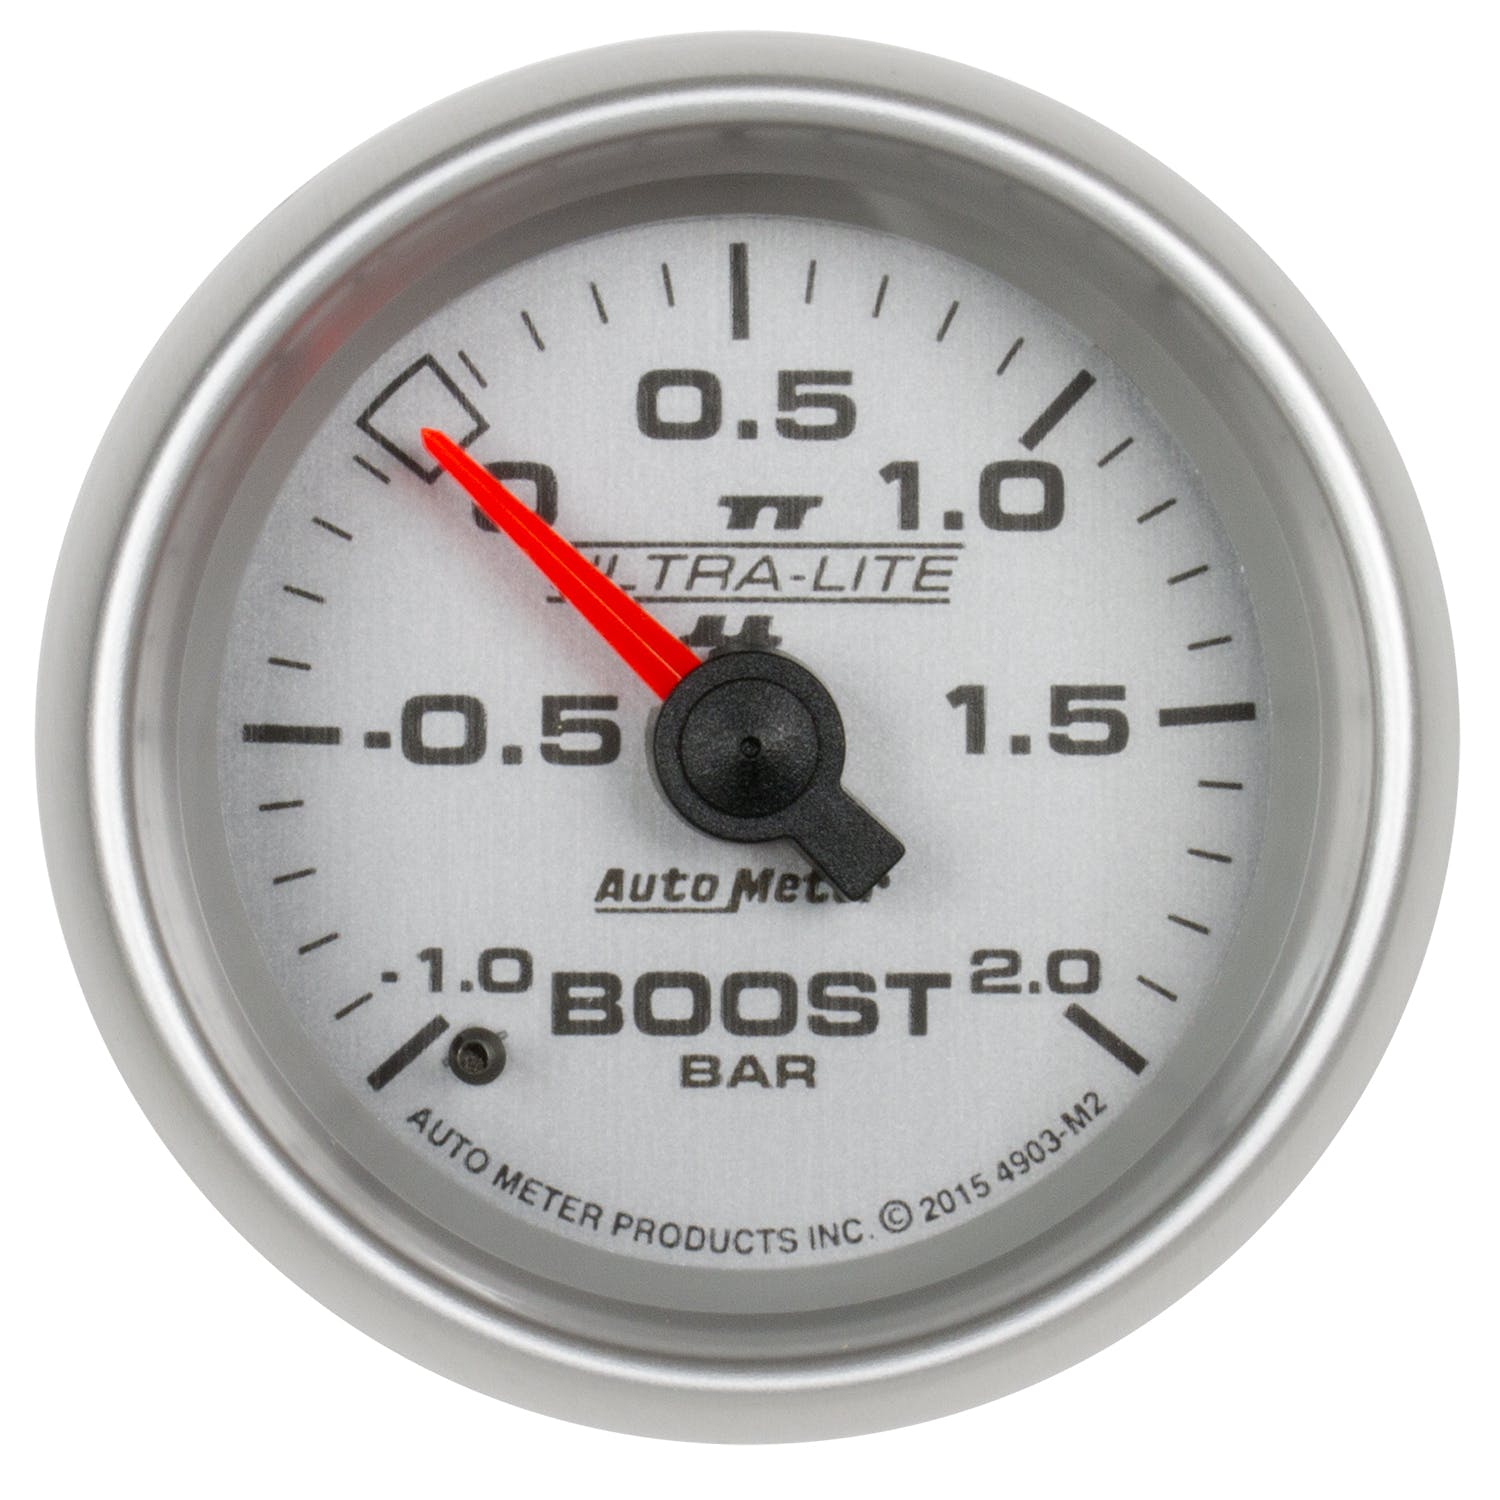 AutoMeter Products 4903-M2 Vac/Boost Gauge 2 1/16, -1 - +2 Bar Mechanical, Ultra-Lite II